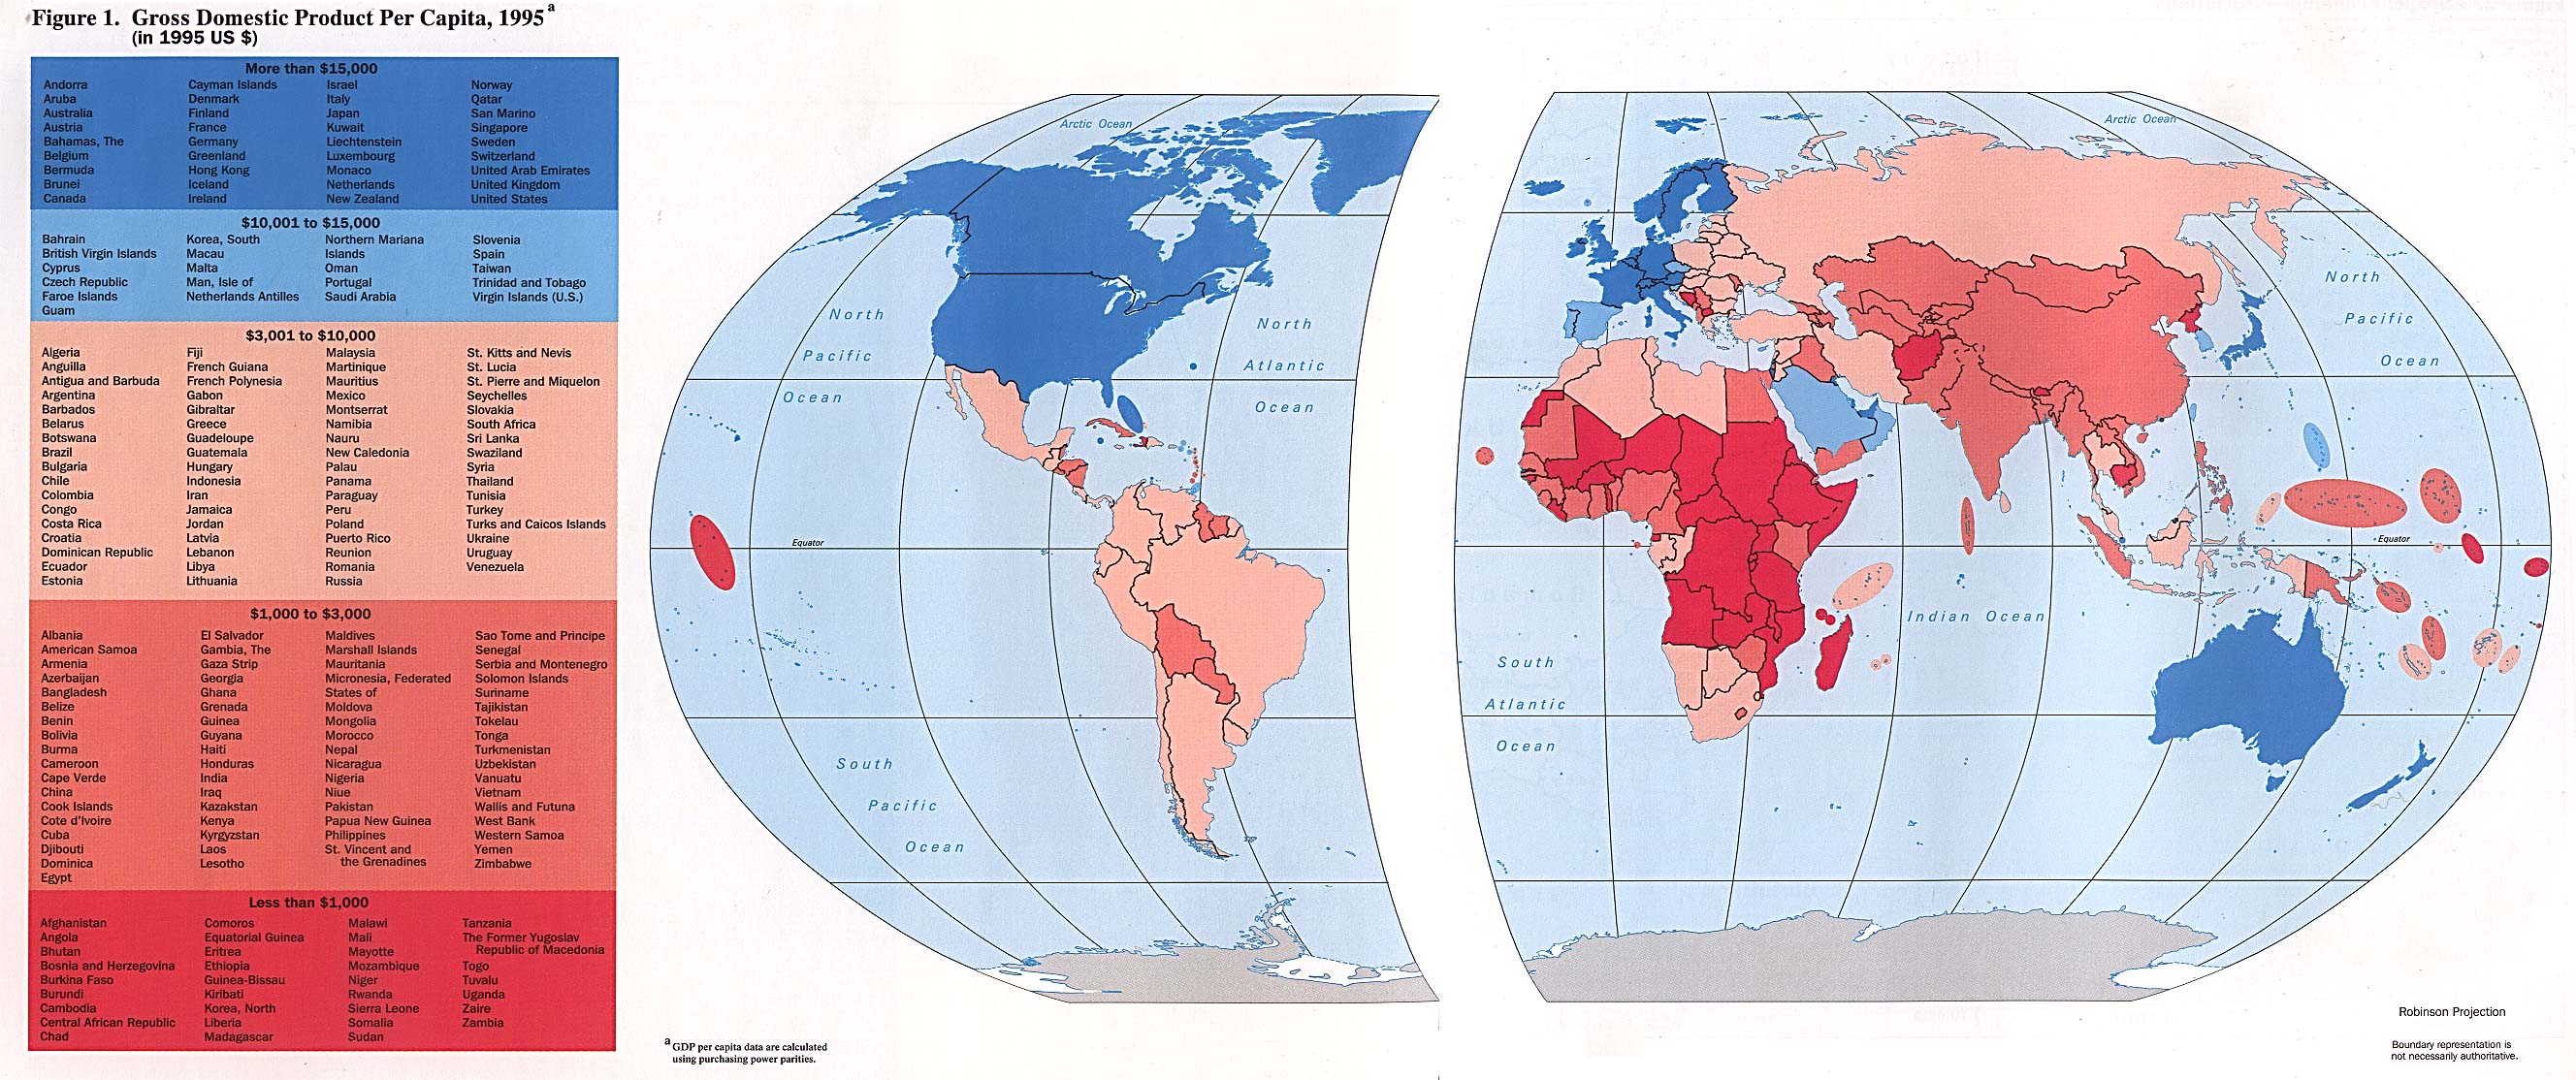 Map Of The World. World Gross Domestic Product Per Capita 1996 (546K) from Handbook of International Economic Statistics 